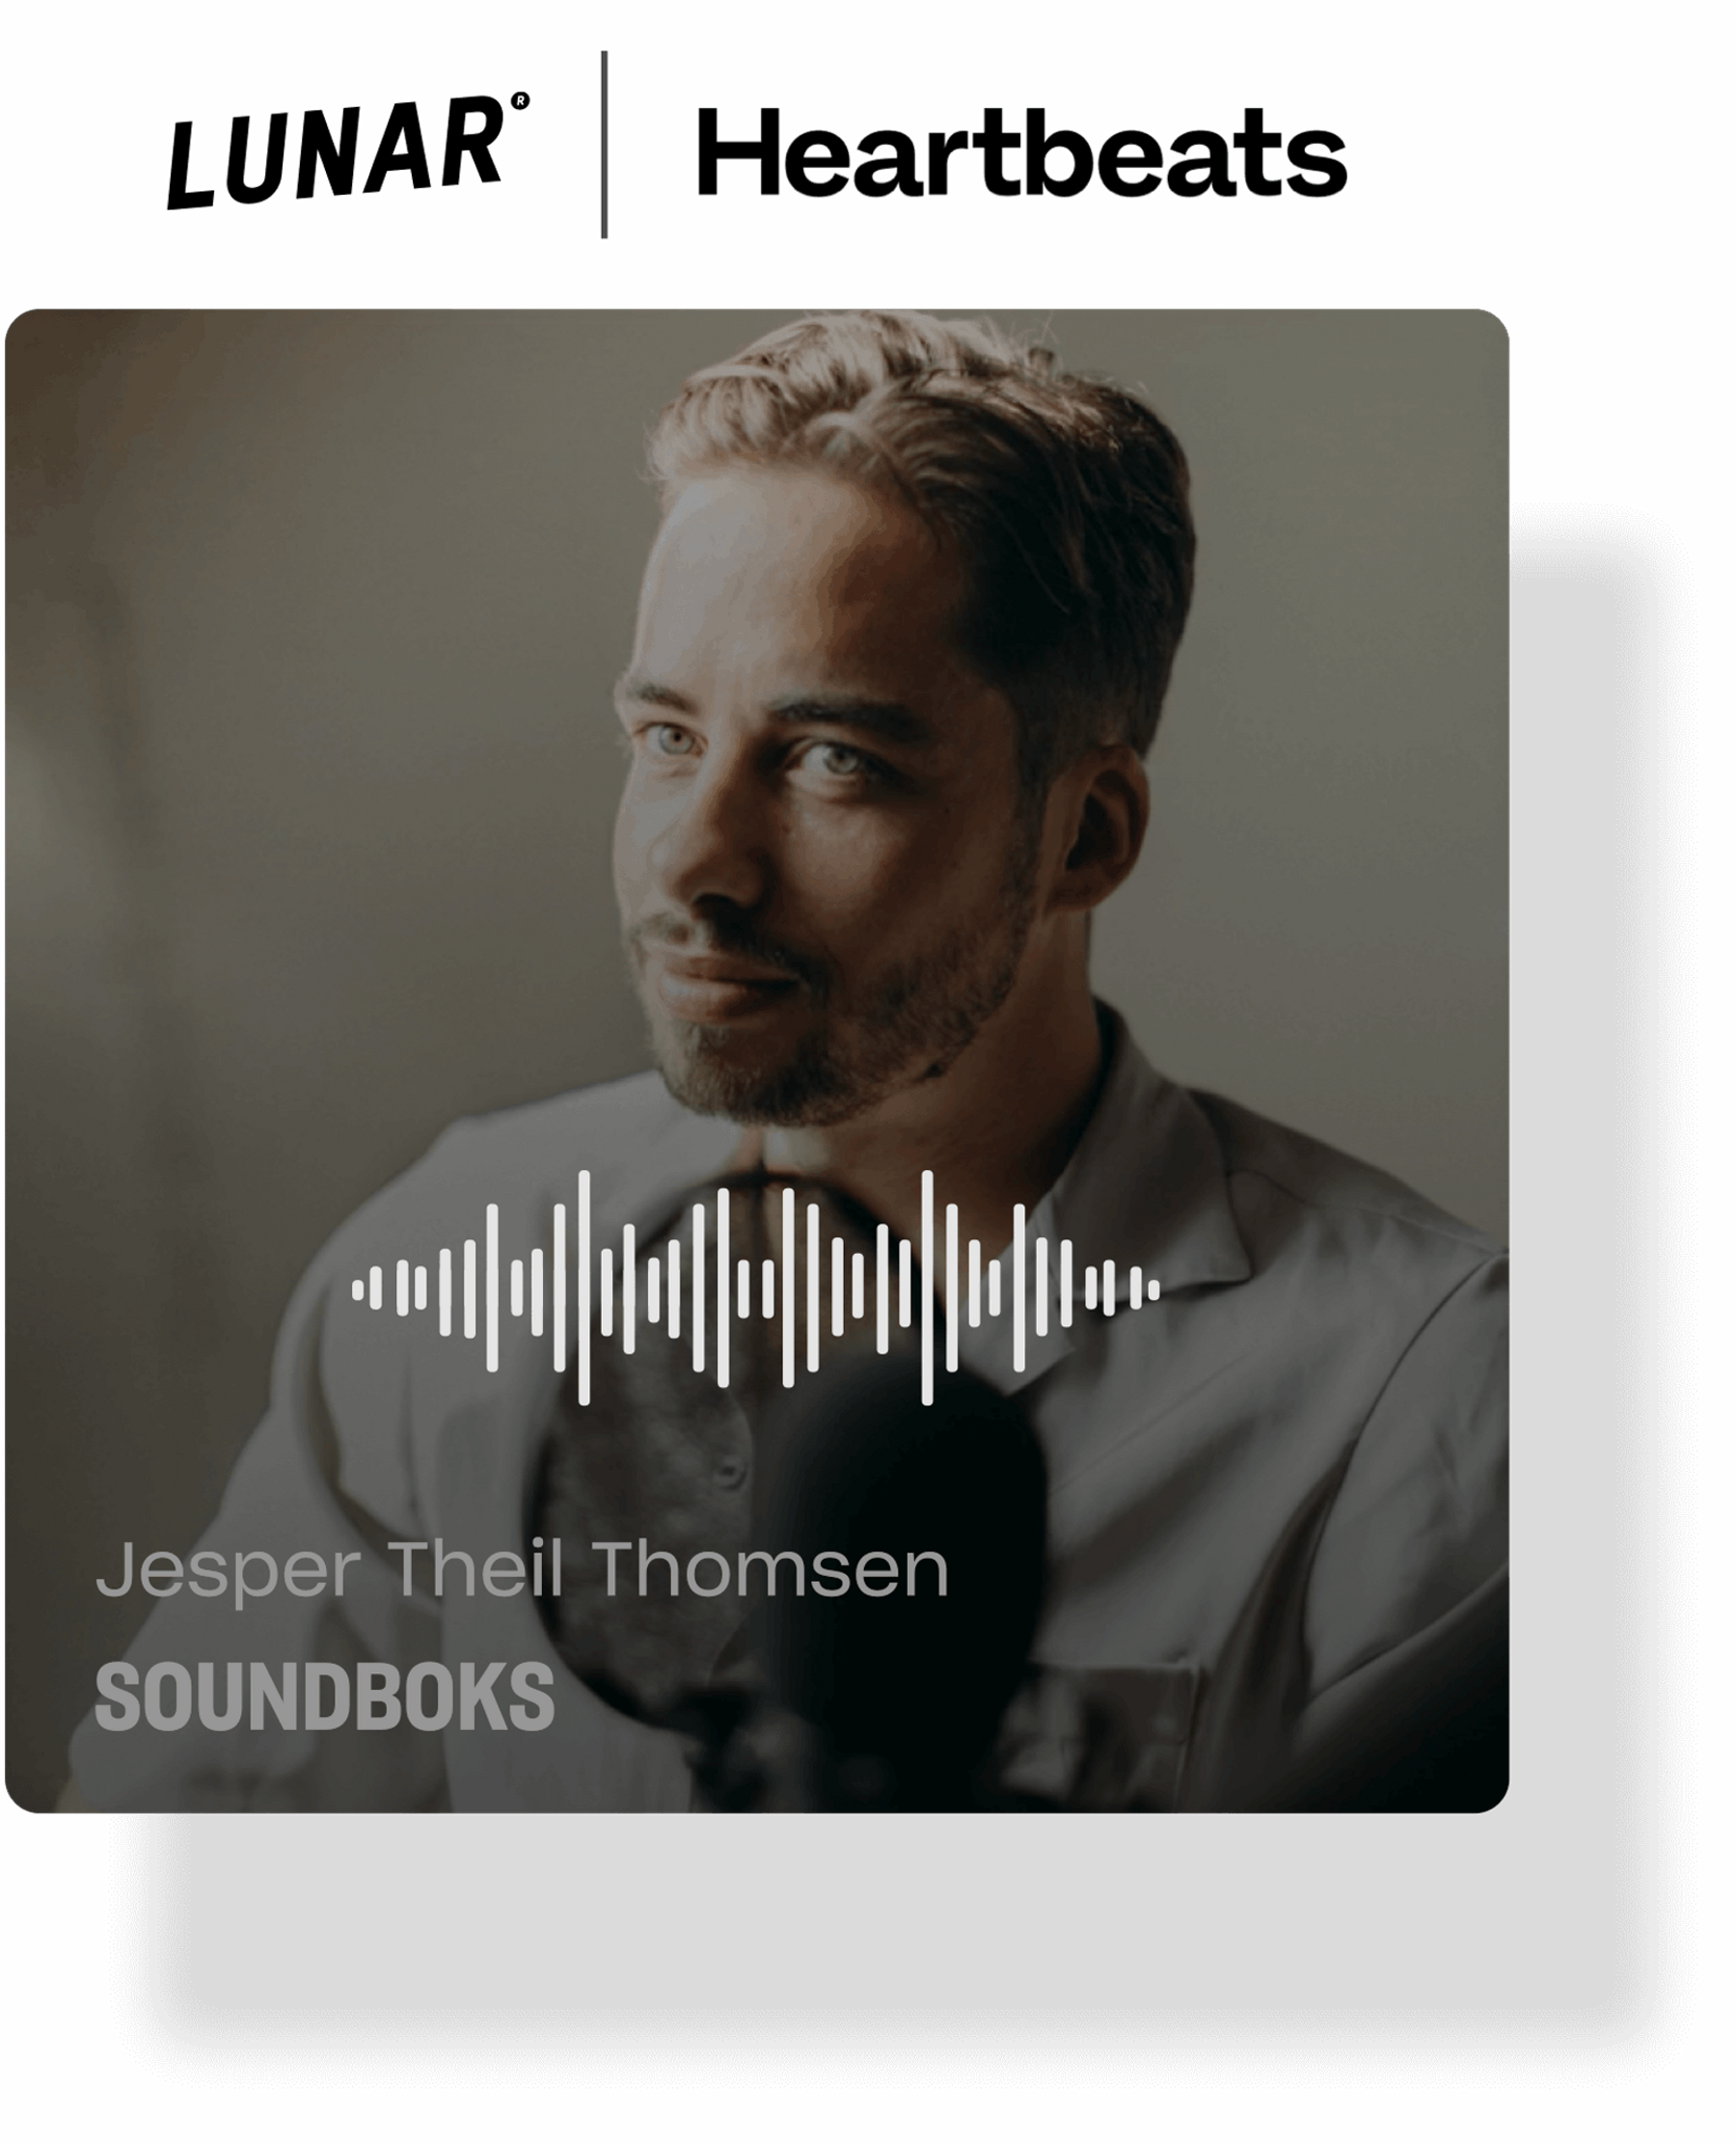 758d8d79-b076-47eb-ad0f-9a652528acc8_heartbeats-jesper-theil-thomsen-soundboks-podcast